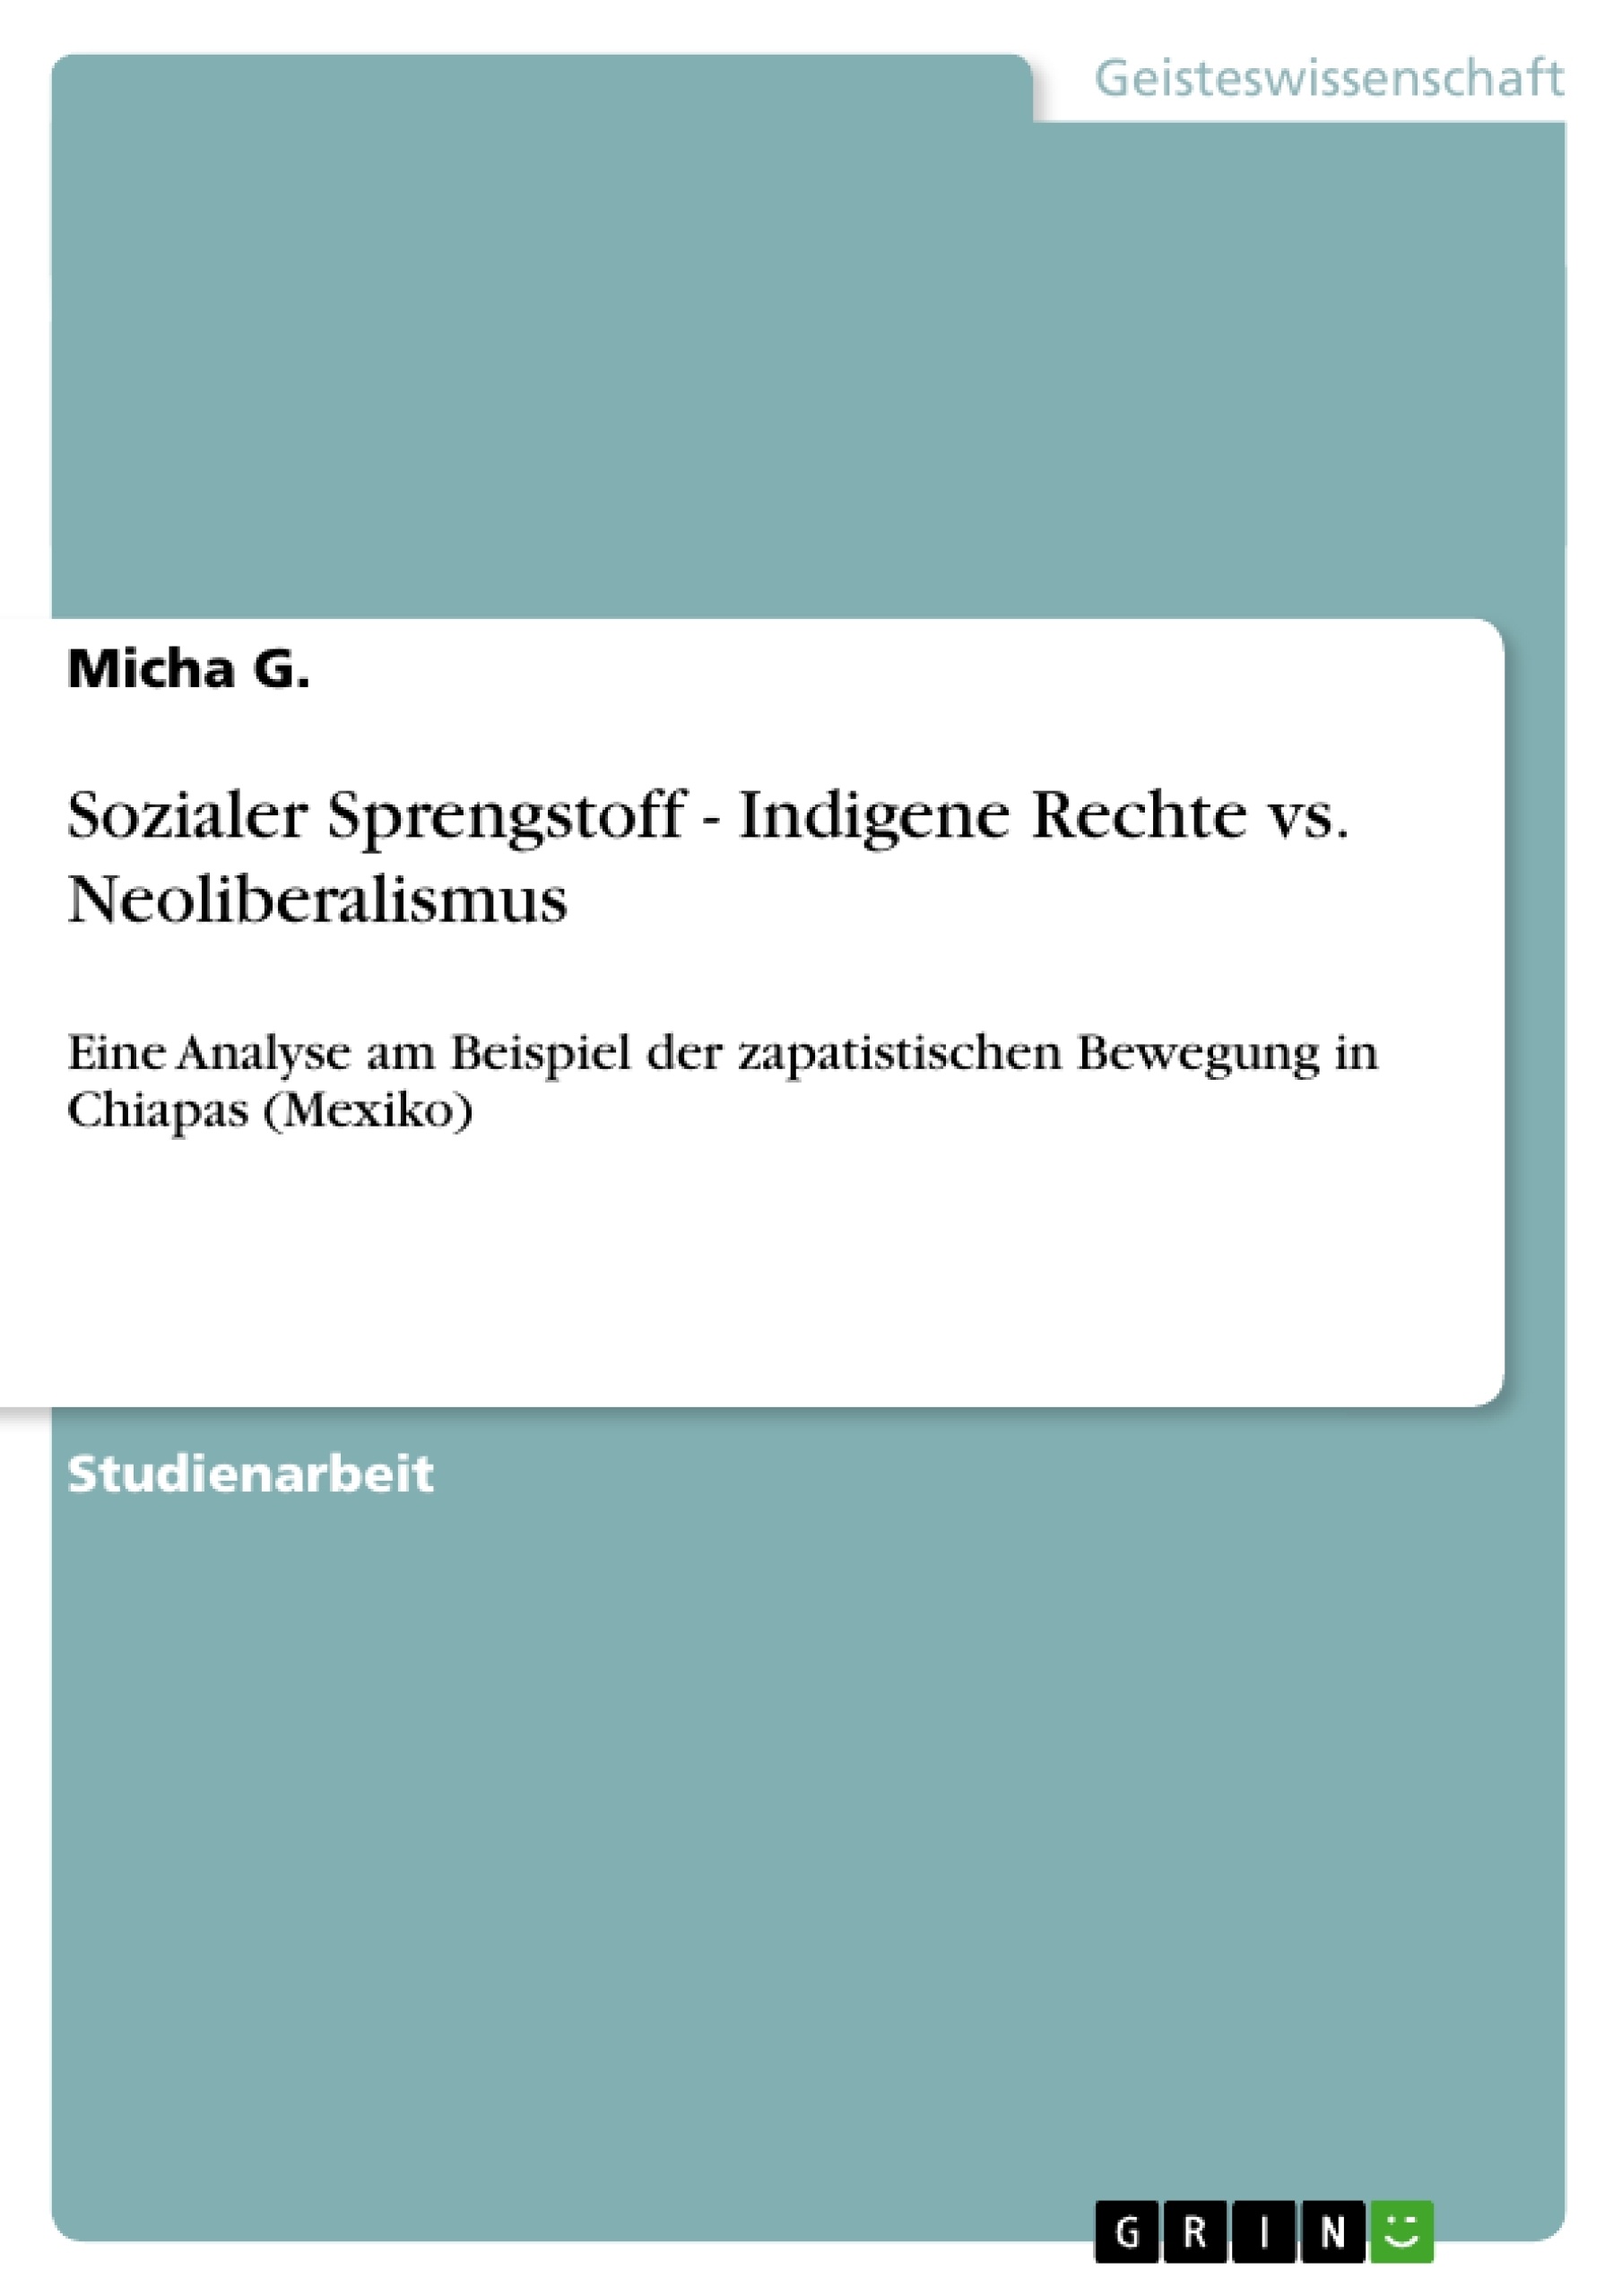 Título: Sozialer Sprengstoff - Indigene Rechte vs. Neoliberalismus